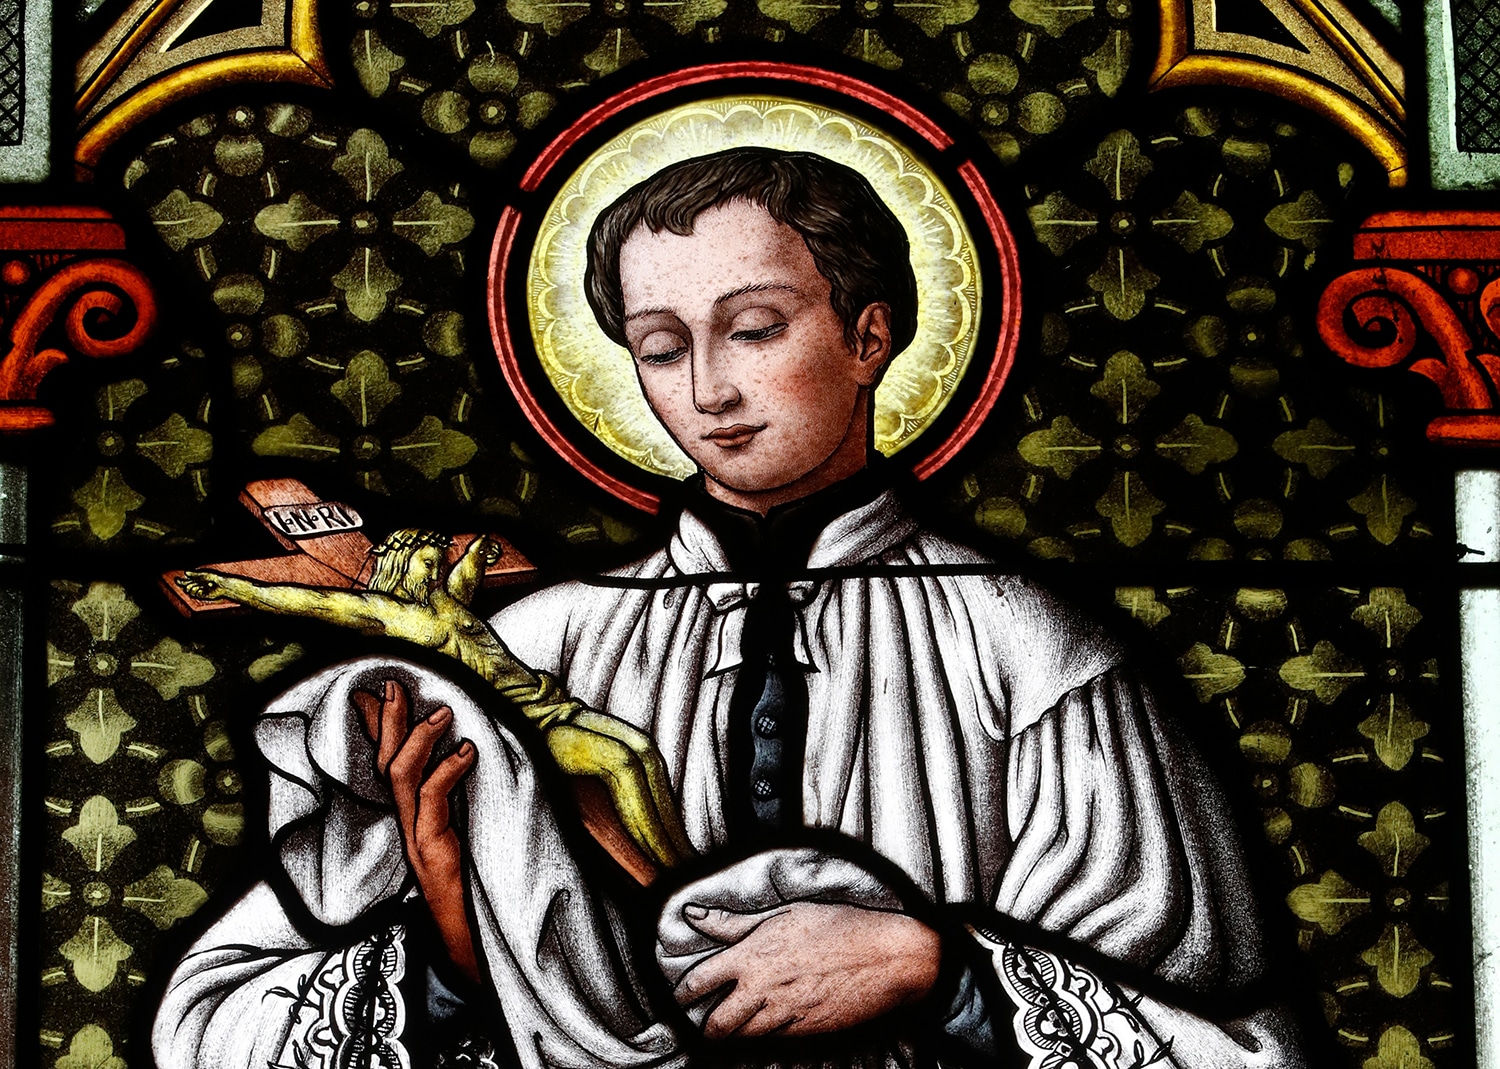 A colorful image of St. Aloysius Gonzaga